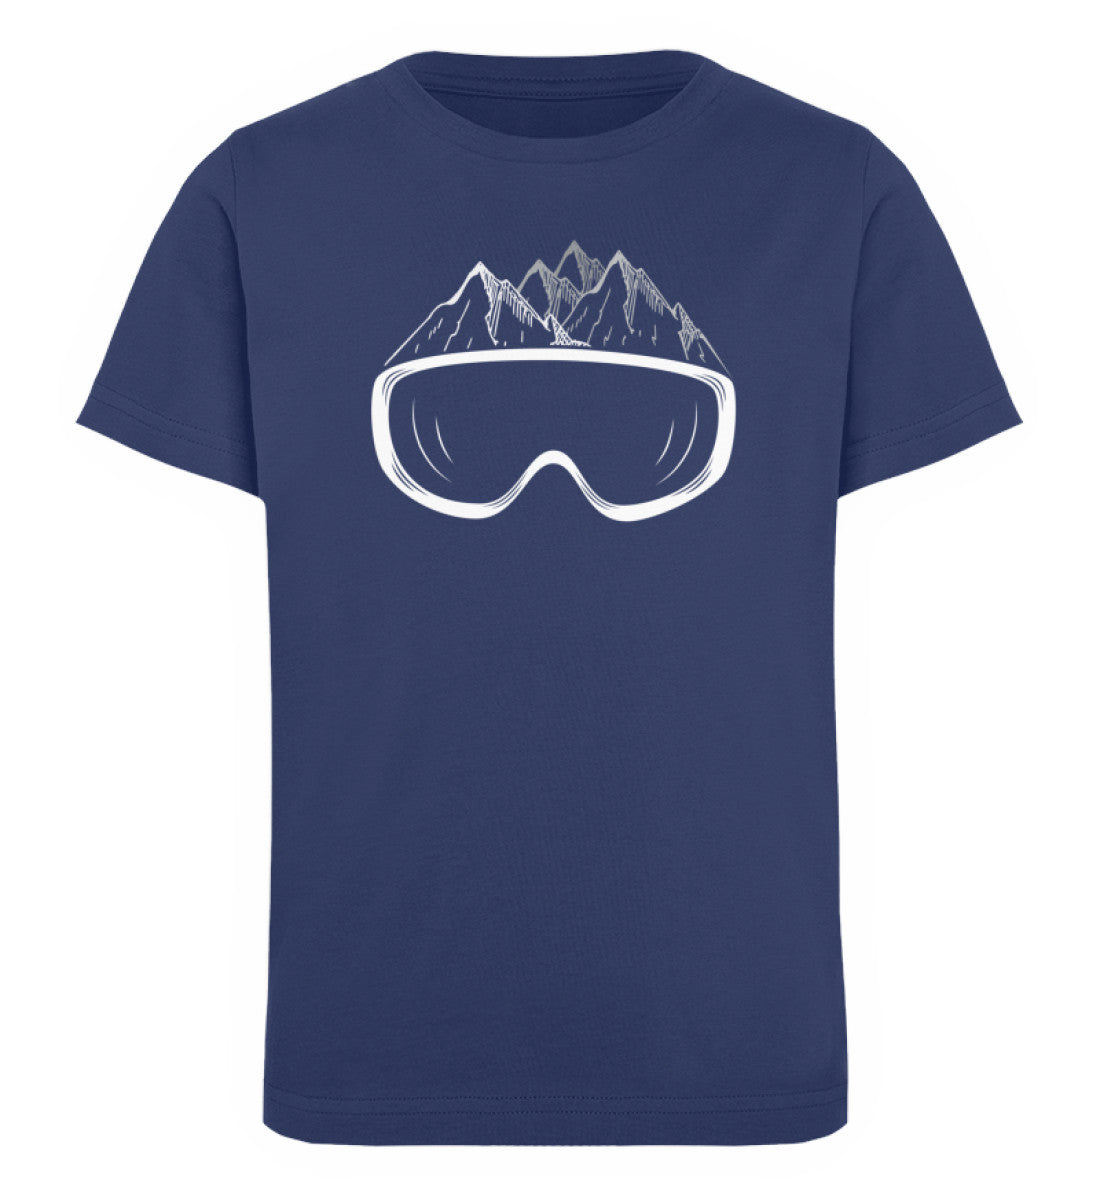 Wintersporteln - Kinder Premium Organic T-Shirt Navyblau